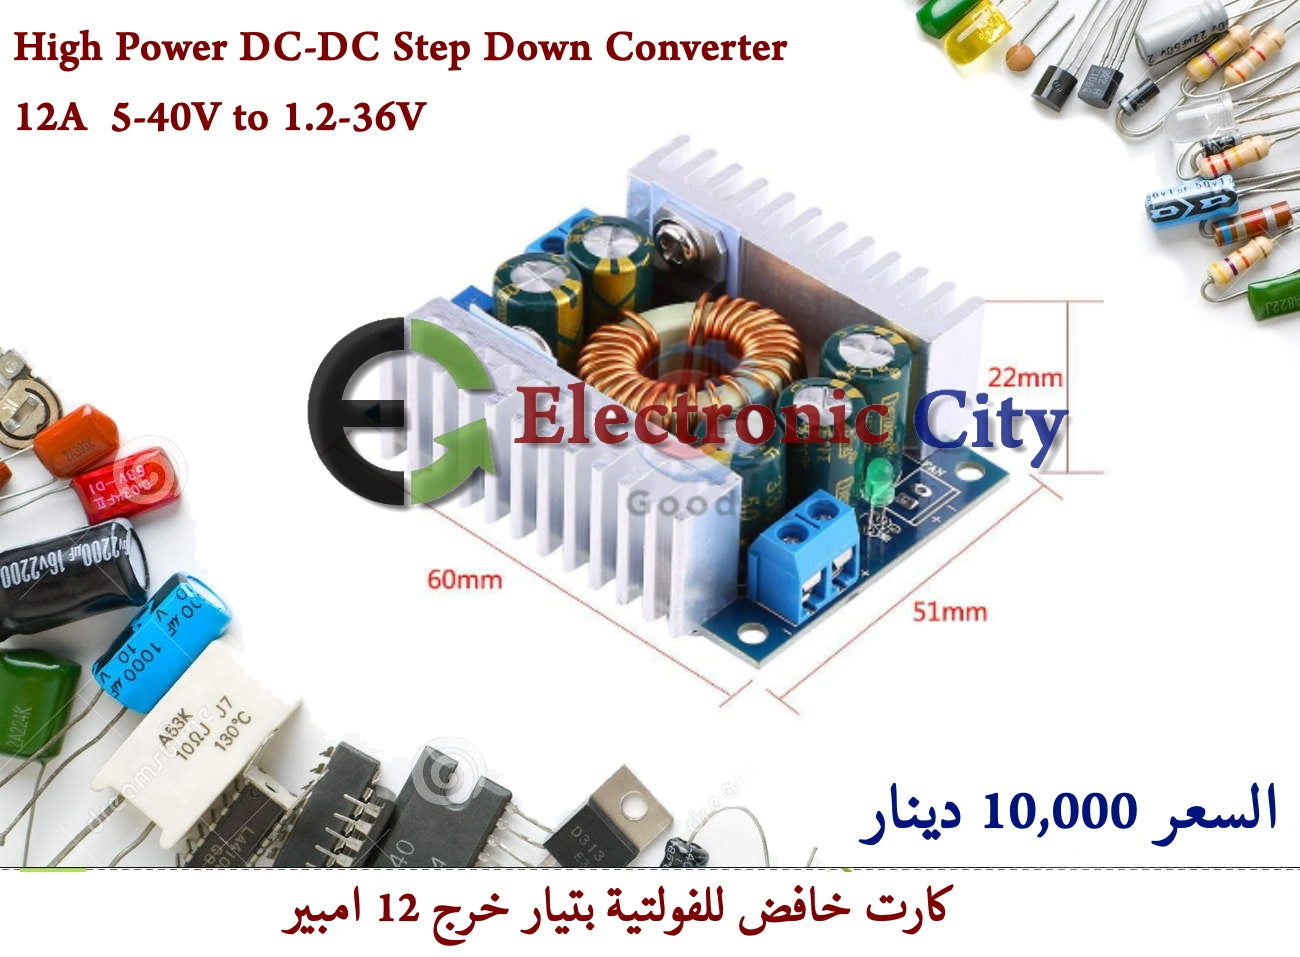 High Power DC-DC Step Down Converter  12A  5-40V to 1.2-36V  #H2 012851